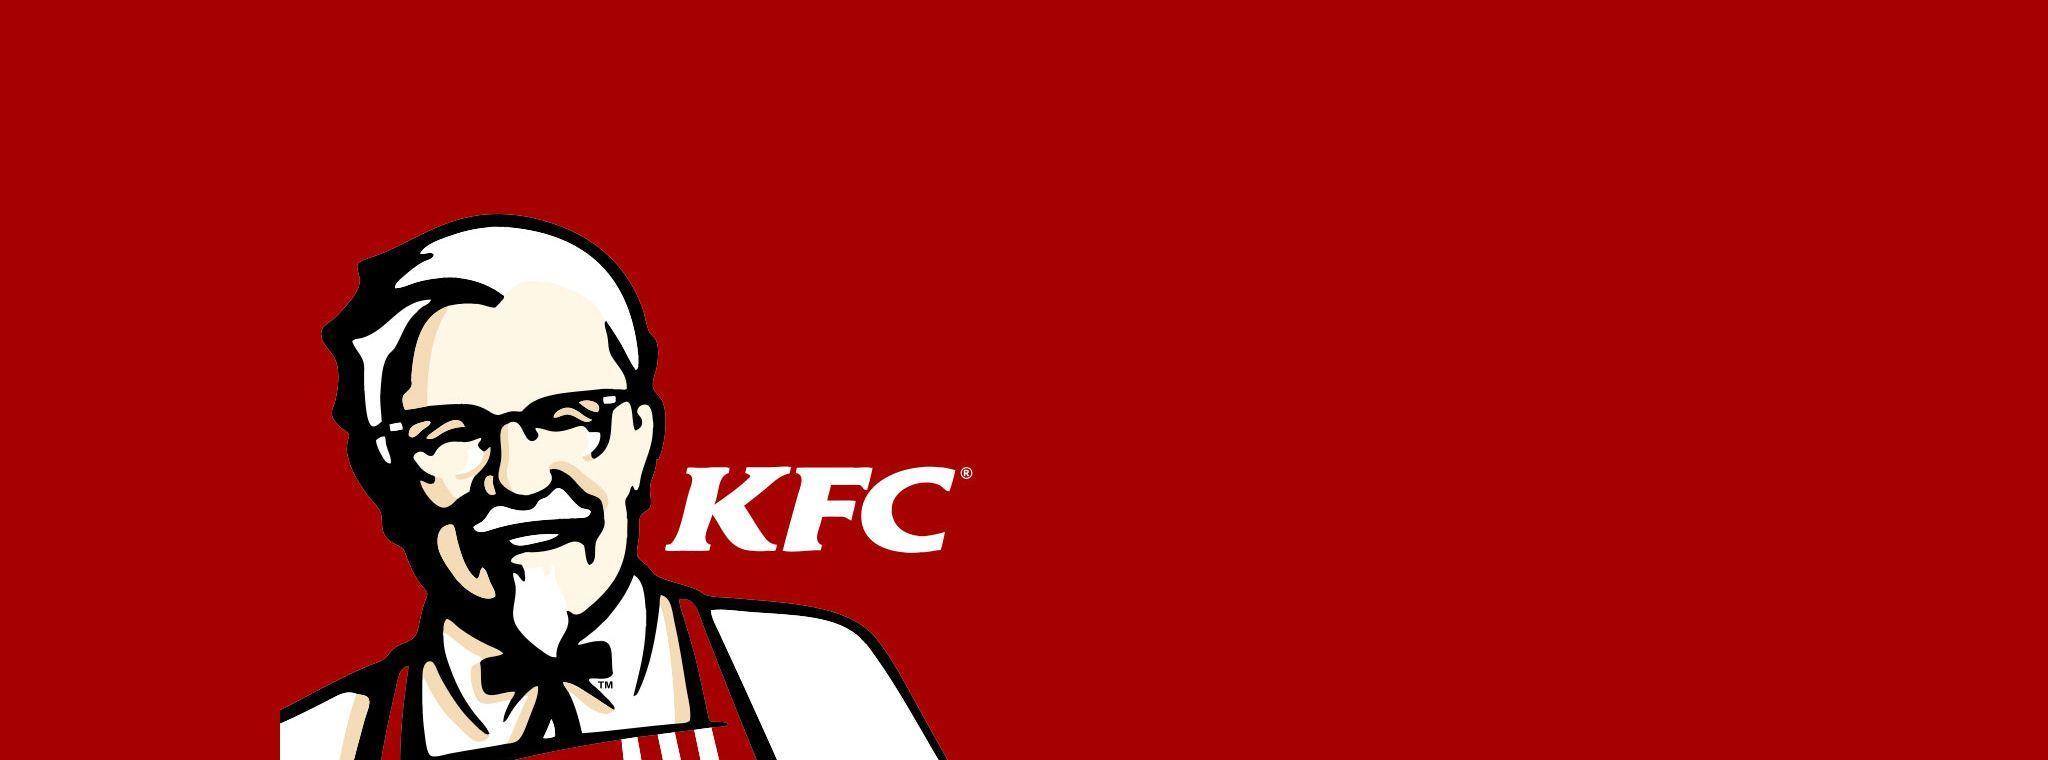 KFC 1080p Wallpaper, KFC, Other